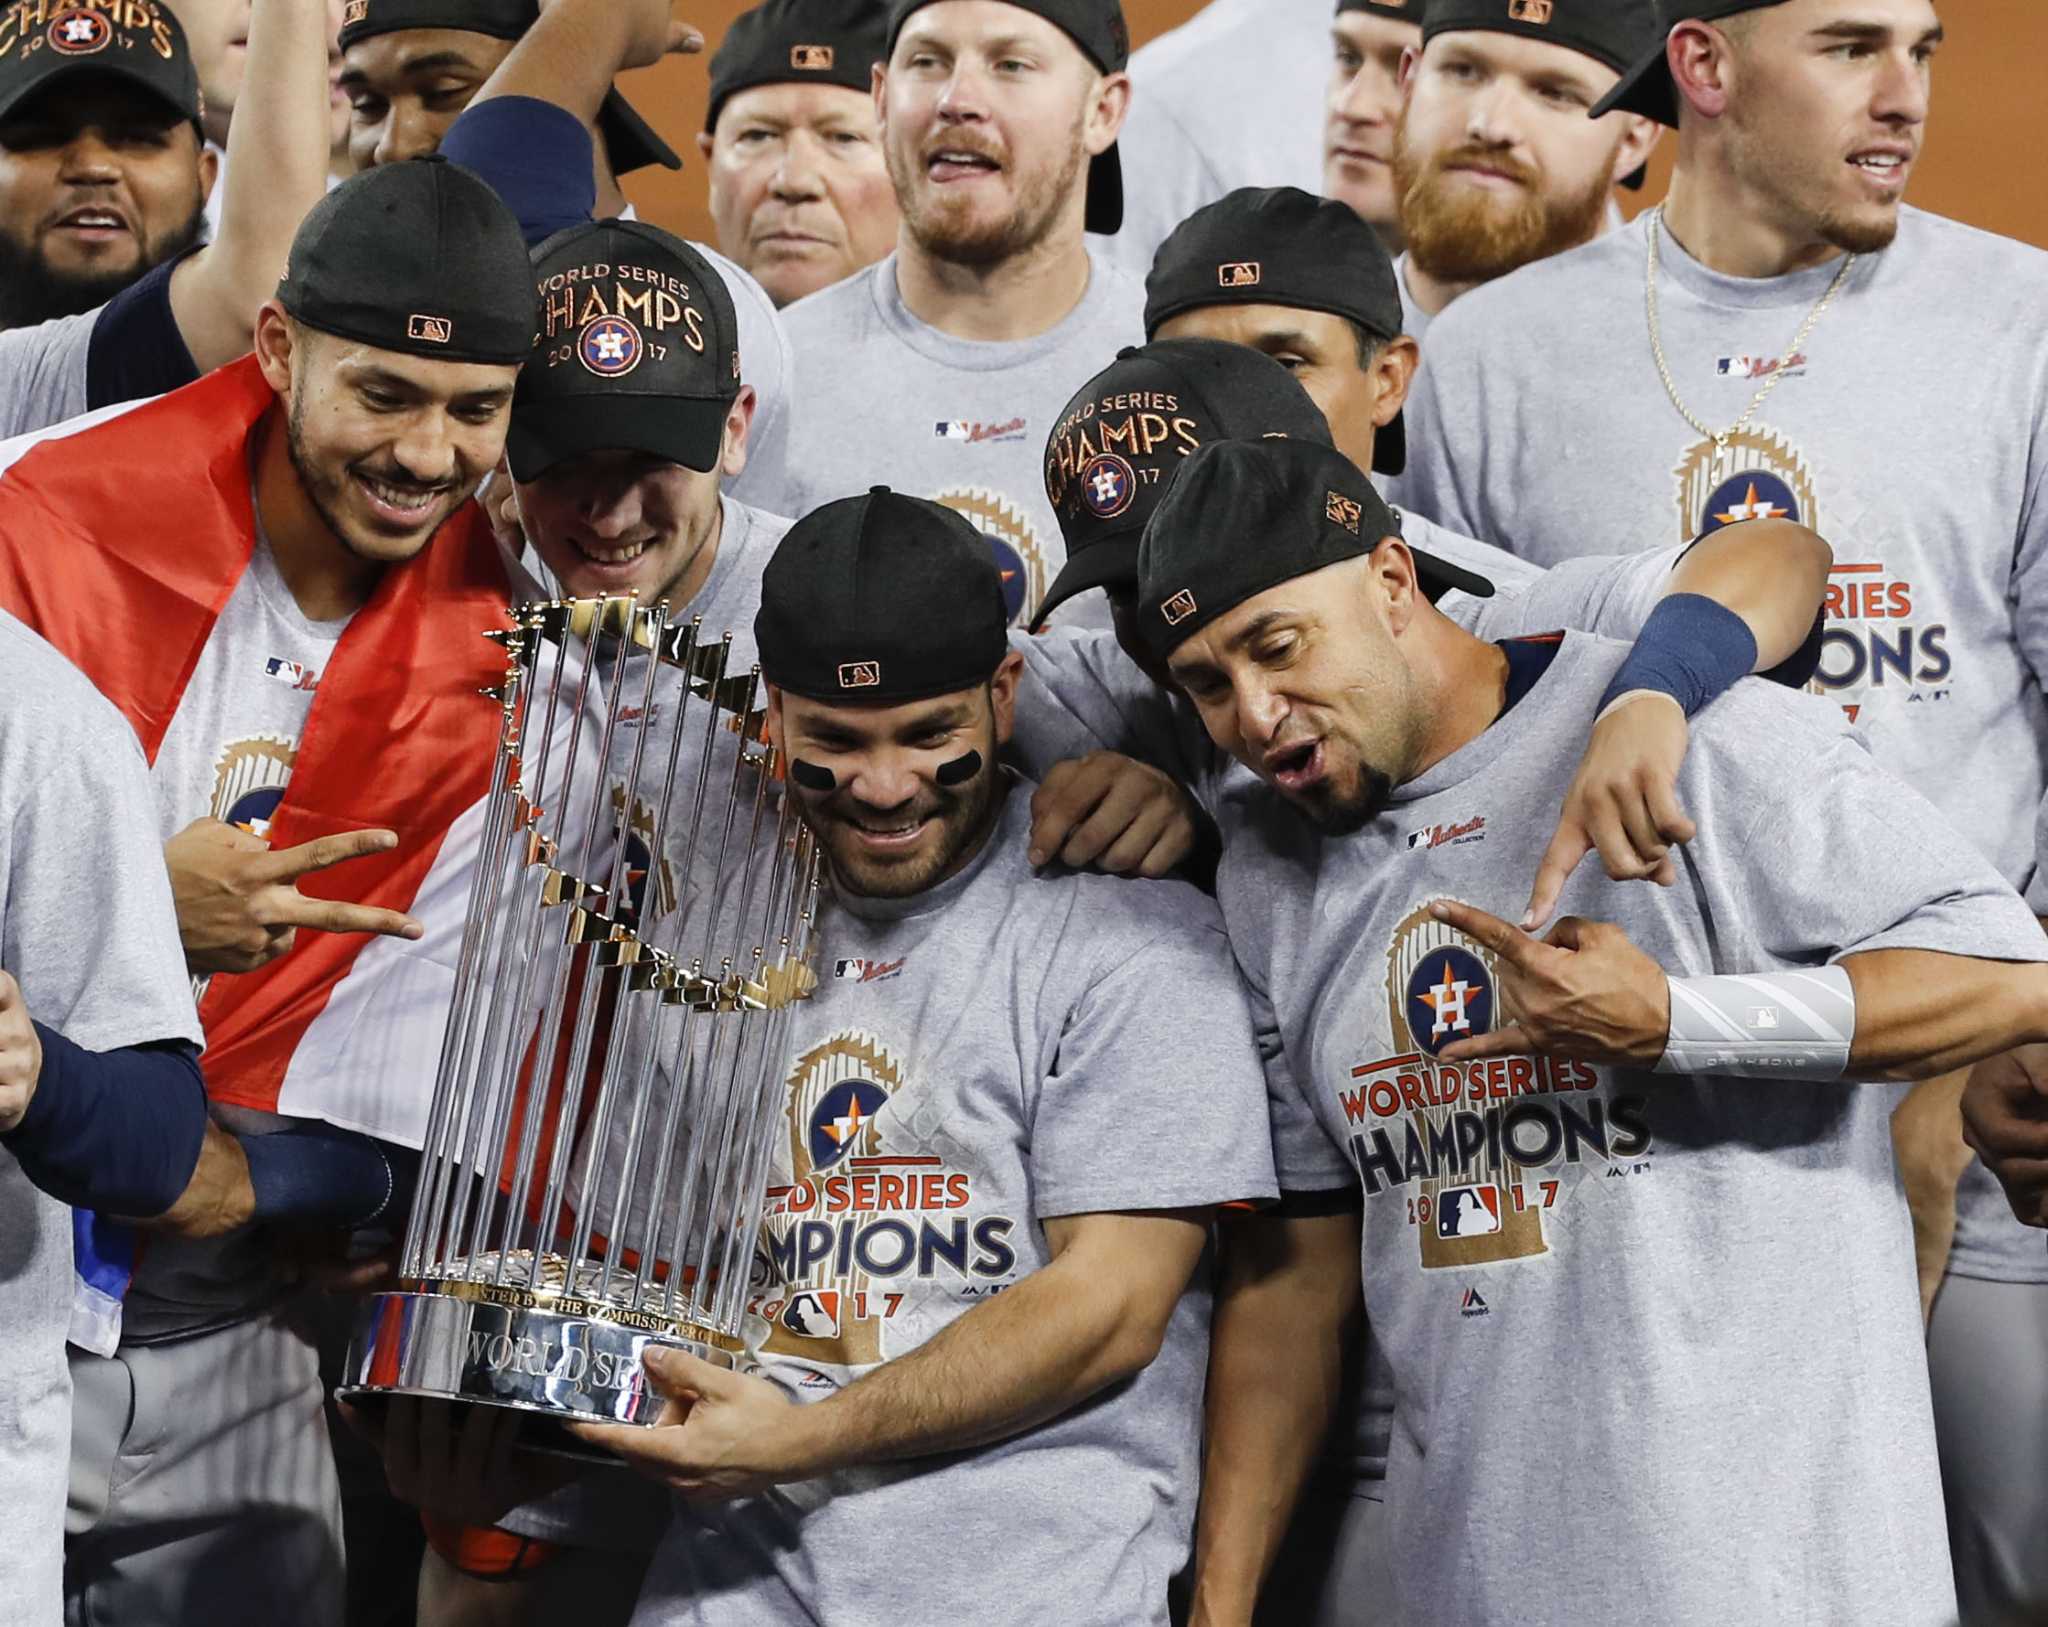 Houston Astros MLB World Series champions gear, shirts - Sports Illustrated